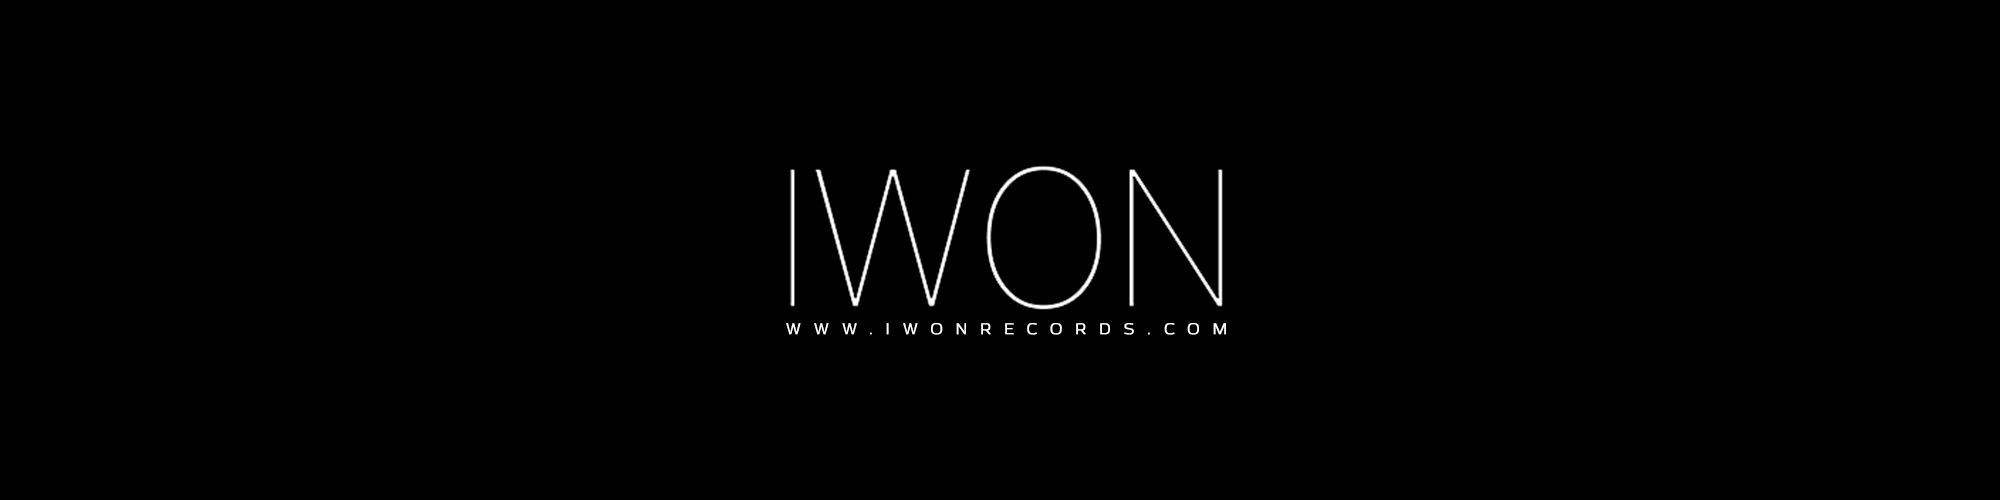 iwon records